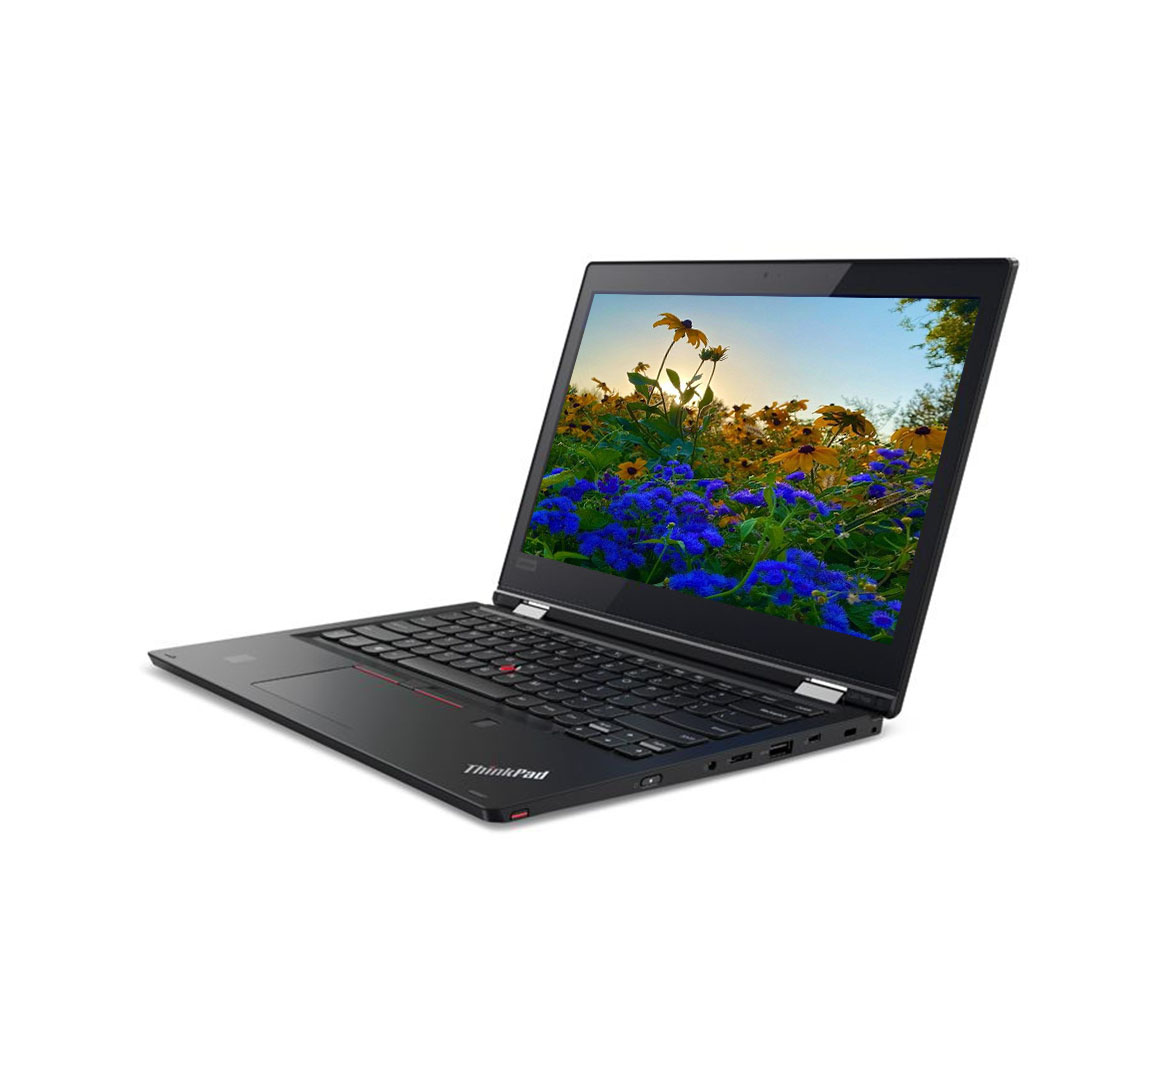 Lenovo ThinkPad L380 Yoga Business Laptop, Intel Core i5-8th Generation CPU, 8GB RAM, 256GB SSD, 13 inch Touchscreen 360°, Windows 10 Pro